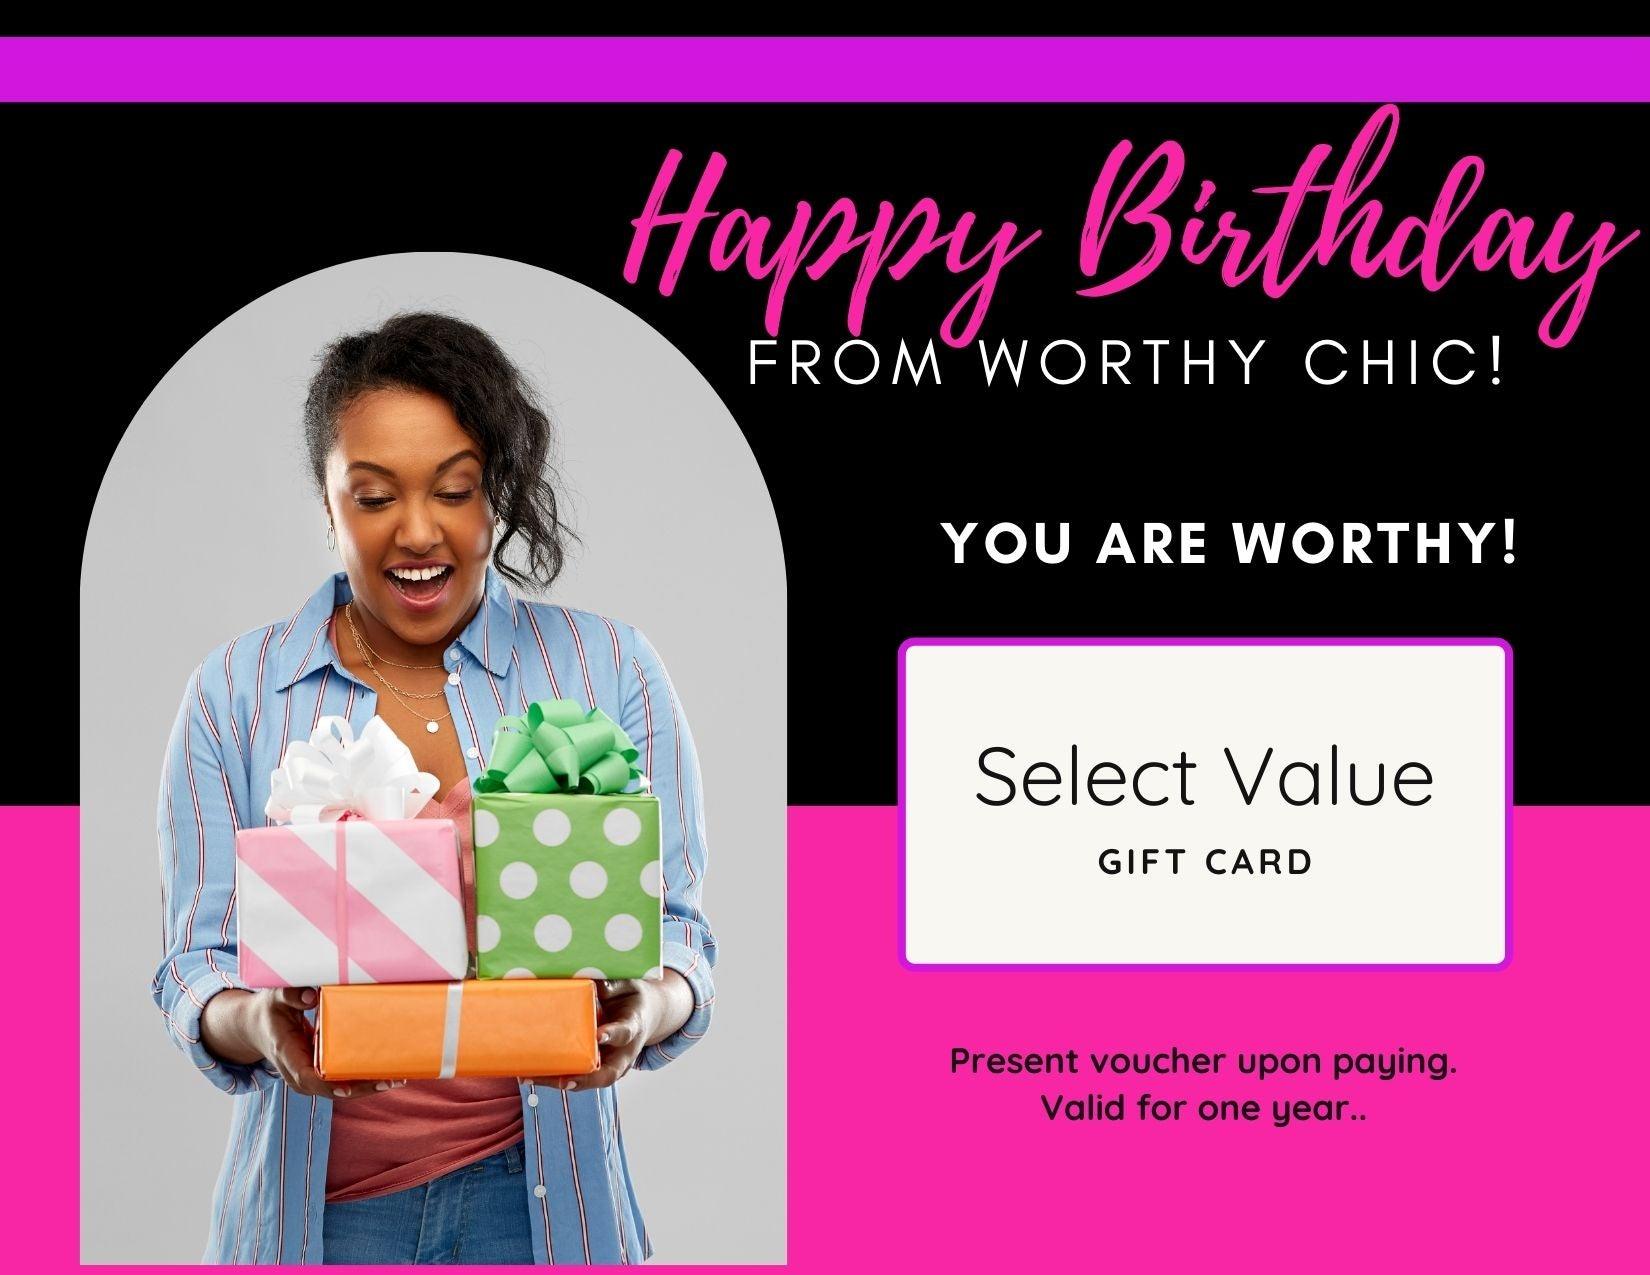 Happy Birthday Gift Card! - Worthy Chic